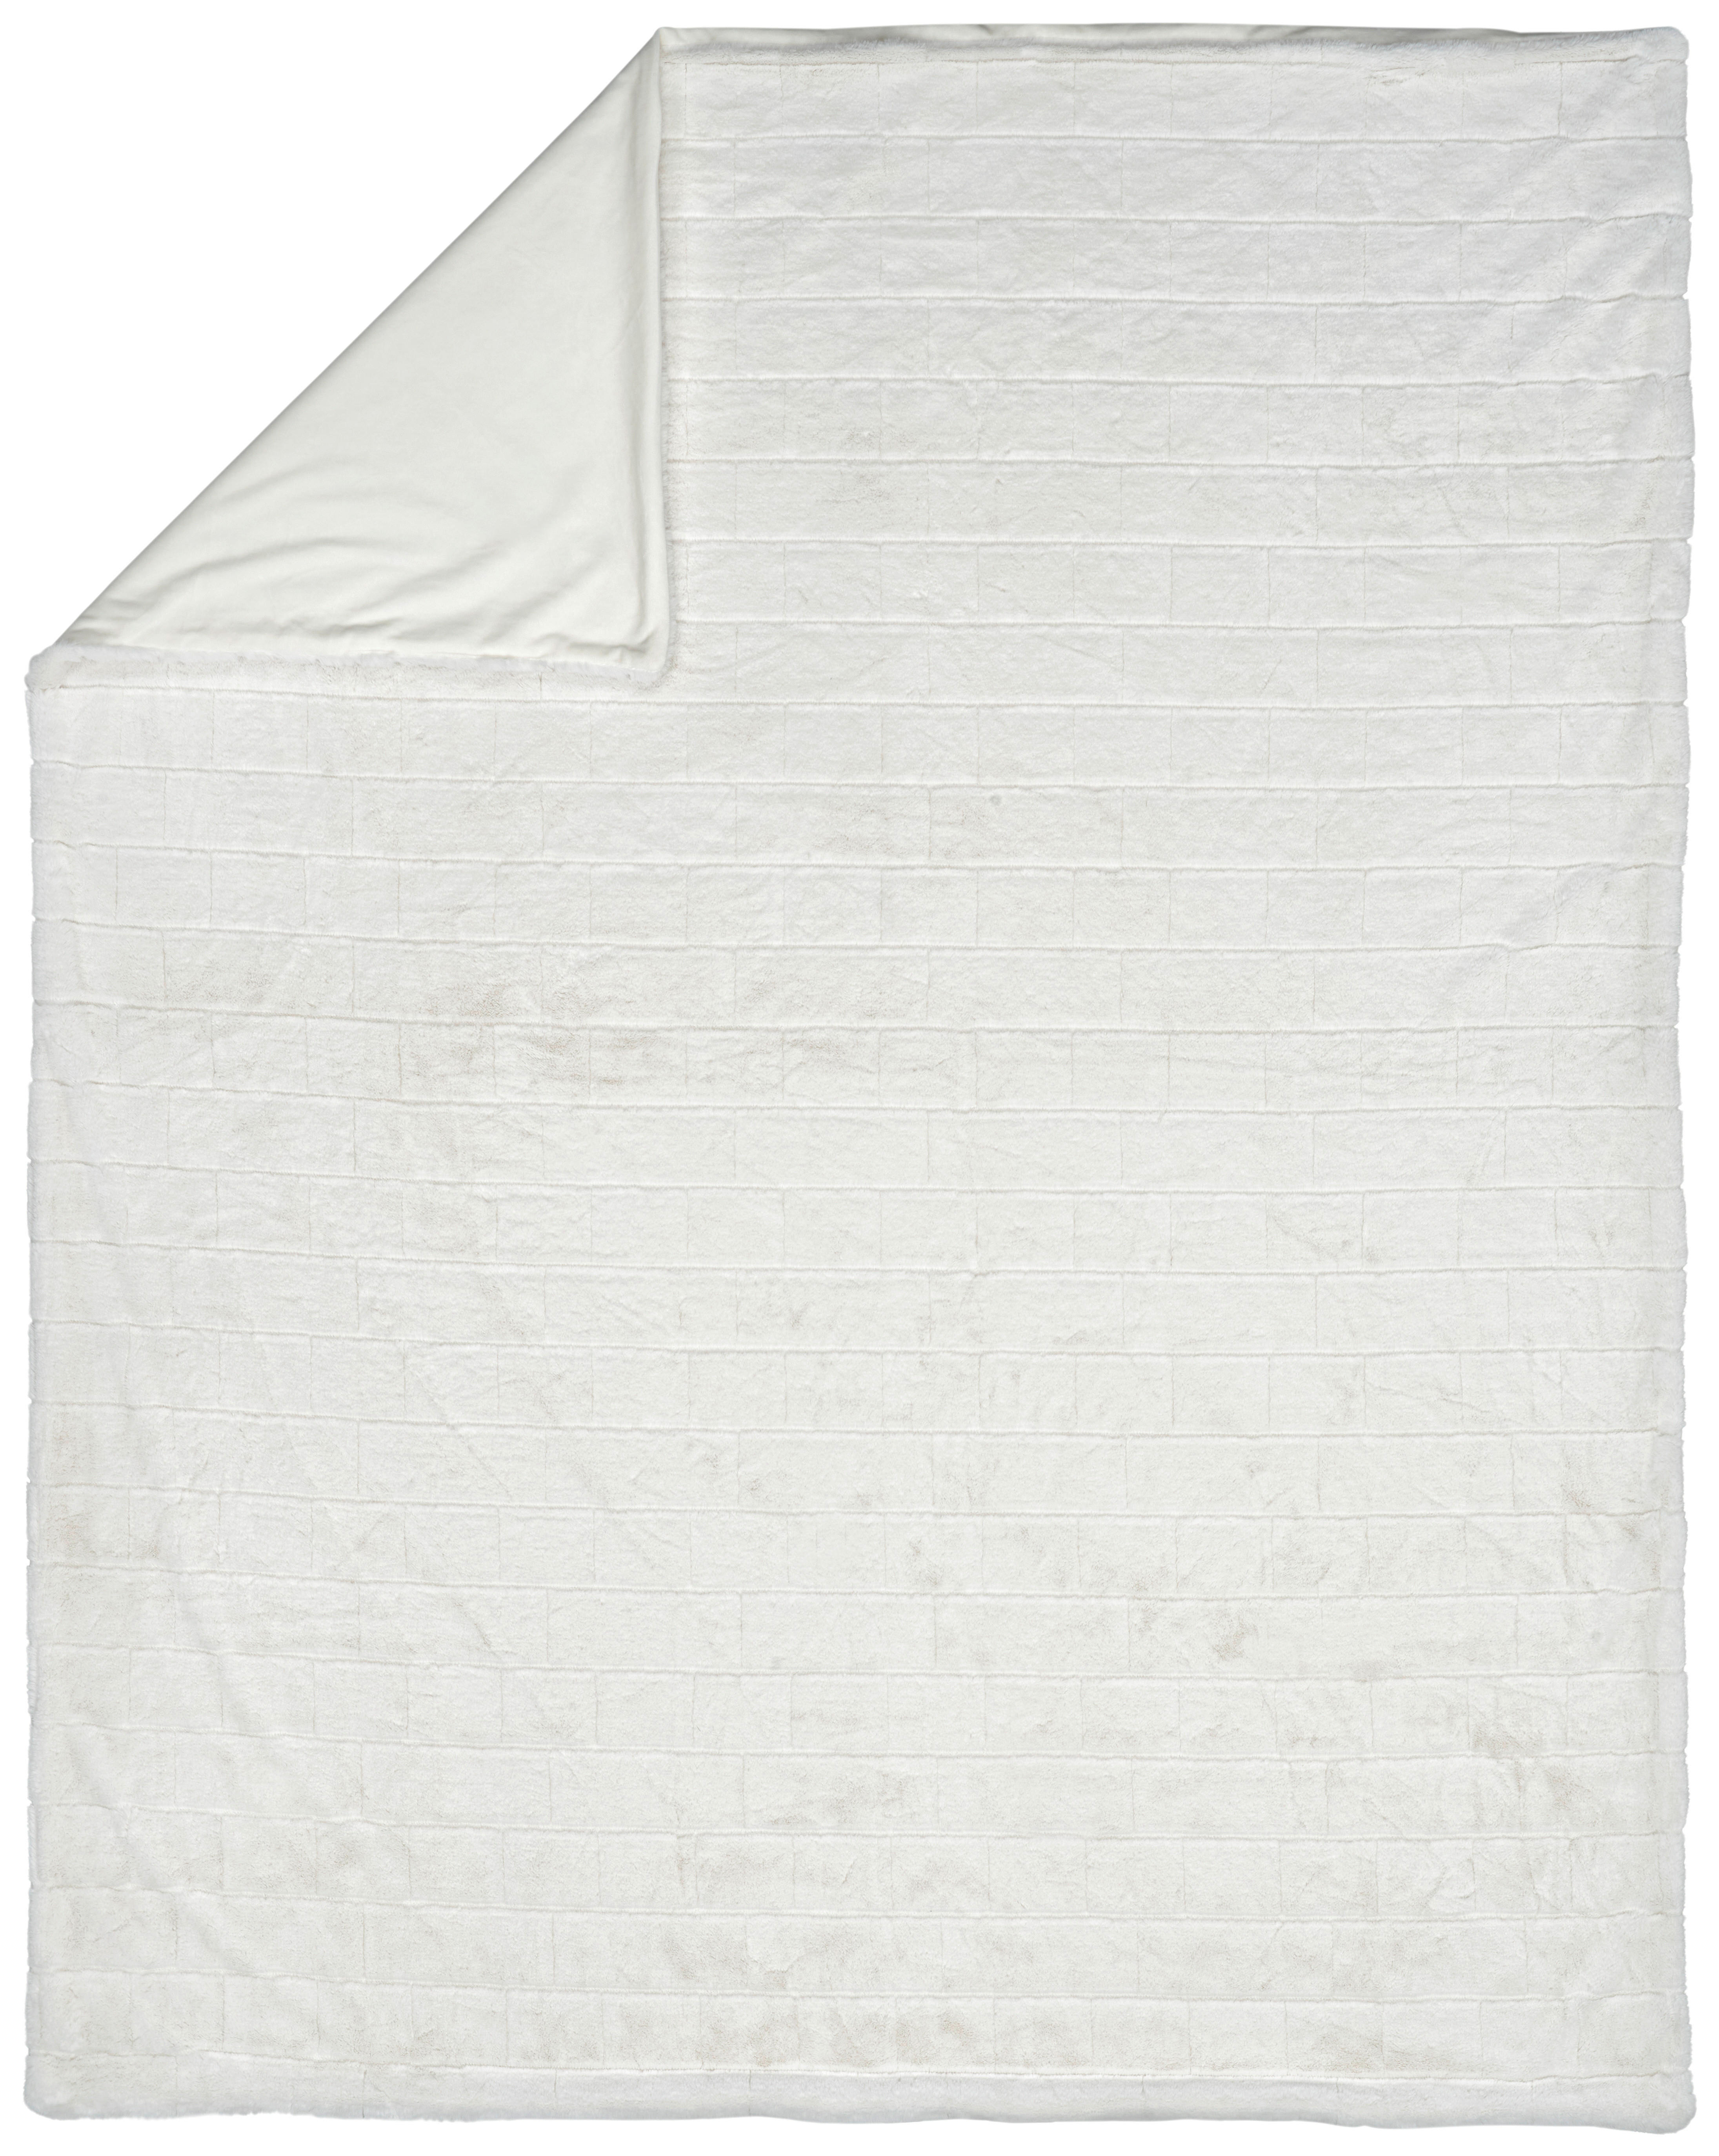 FELLDECKE SENJA 150/200 cm  - Weiß, KONVENTIONELL, Textil (150/200cm) - Dieter Knoll